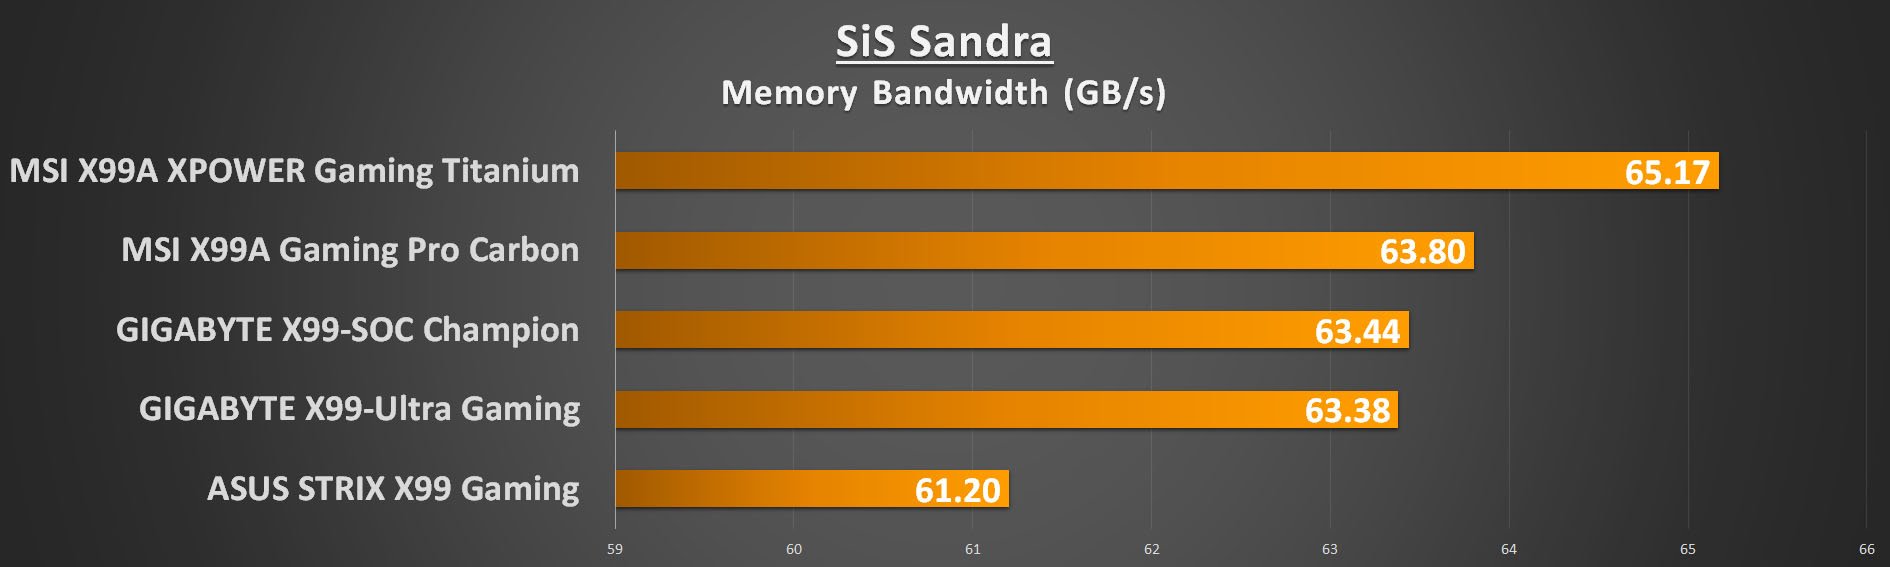 gigabyte-x99-ultra-gaming-sandra-cpu-mem-band